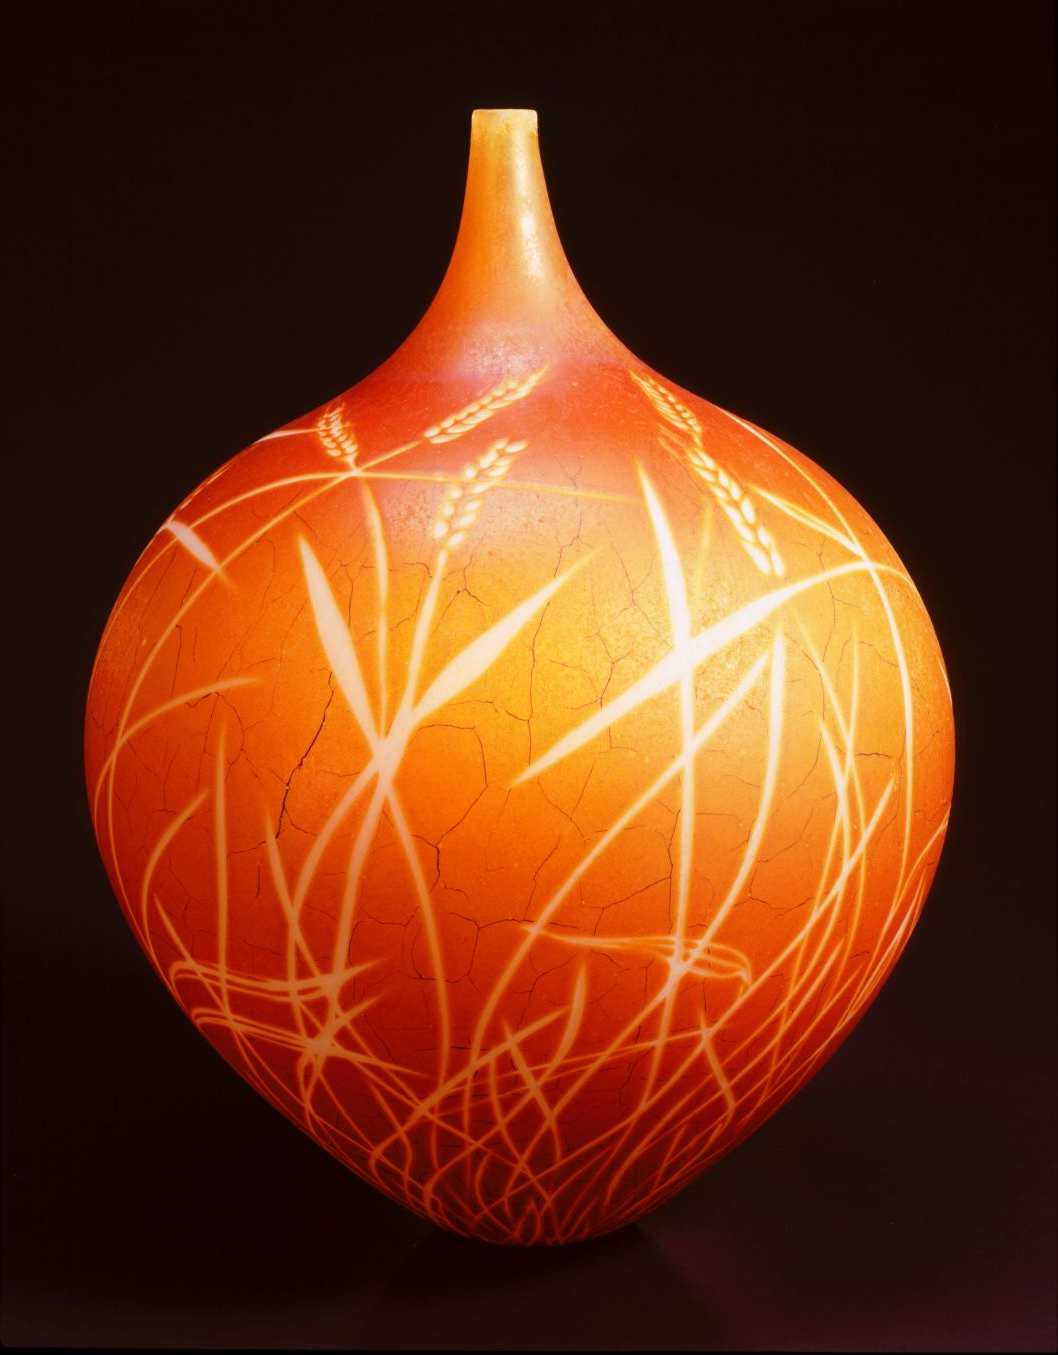  William Morris,&nbsp; Vase with Grass (Amber)&nbsp; (2004, glass, 20 1/2 x 15 3/4 x 15 3/4 inches), WM.21 